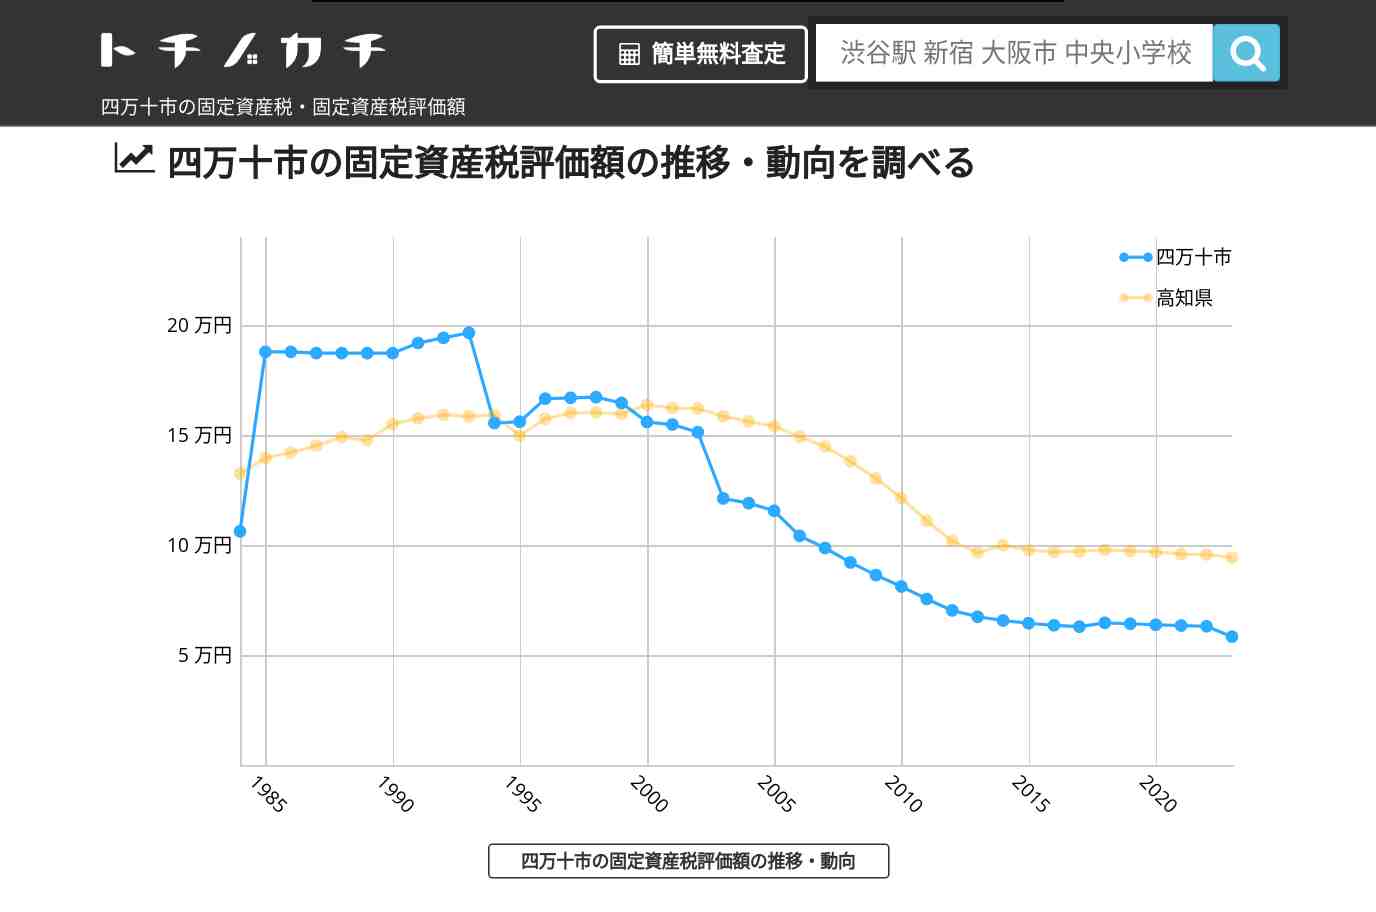 利岡小学校(高知県 四万十市)周辺の固定資産税・固定資産税評価額 | トチノカチ